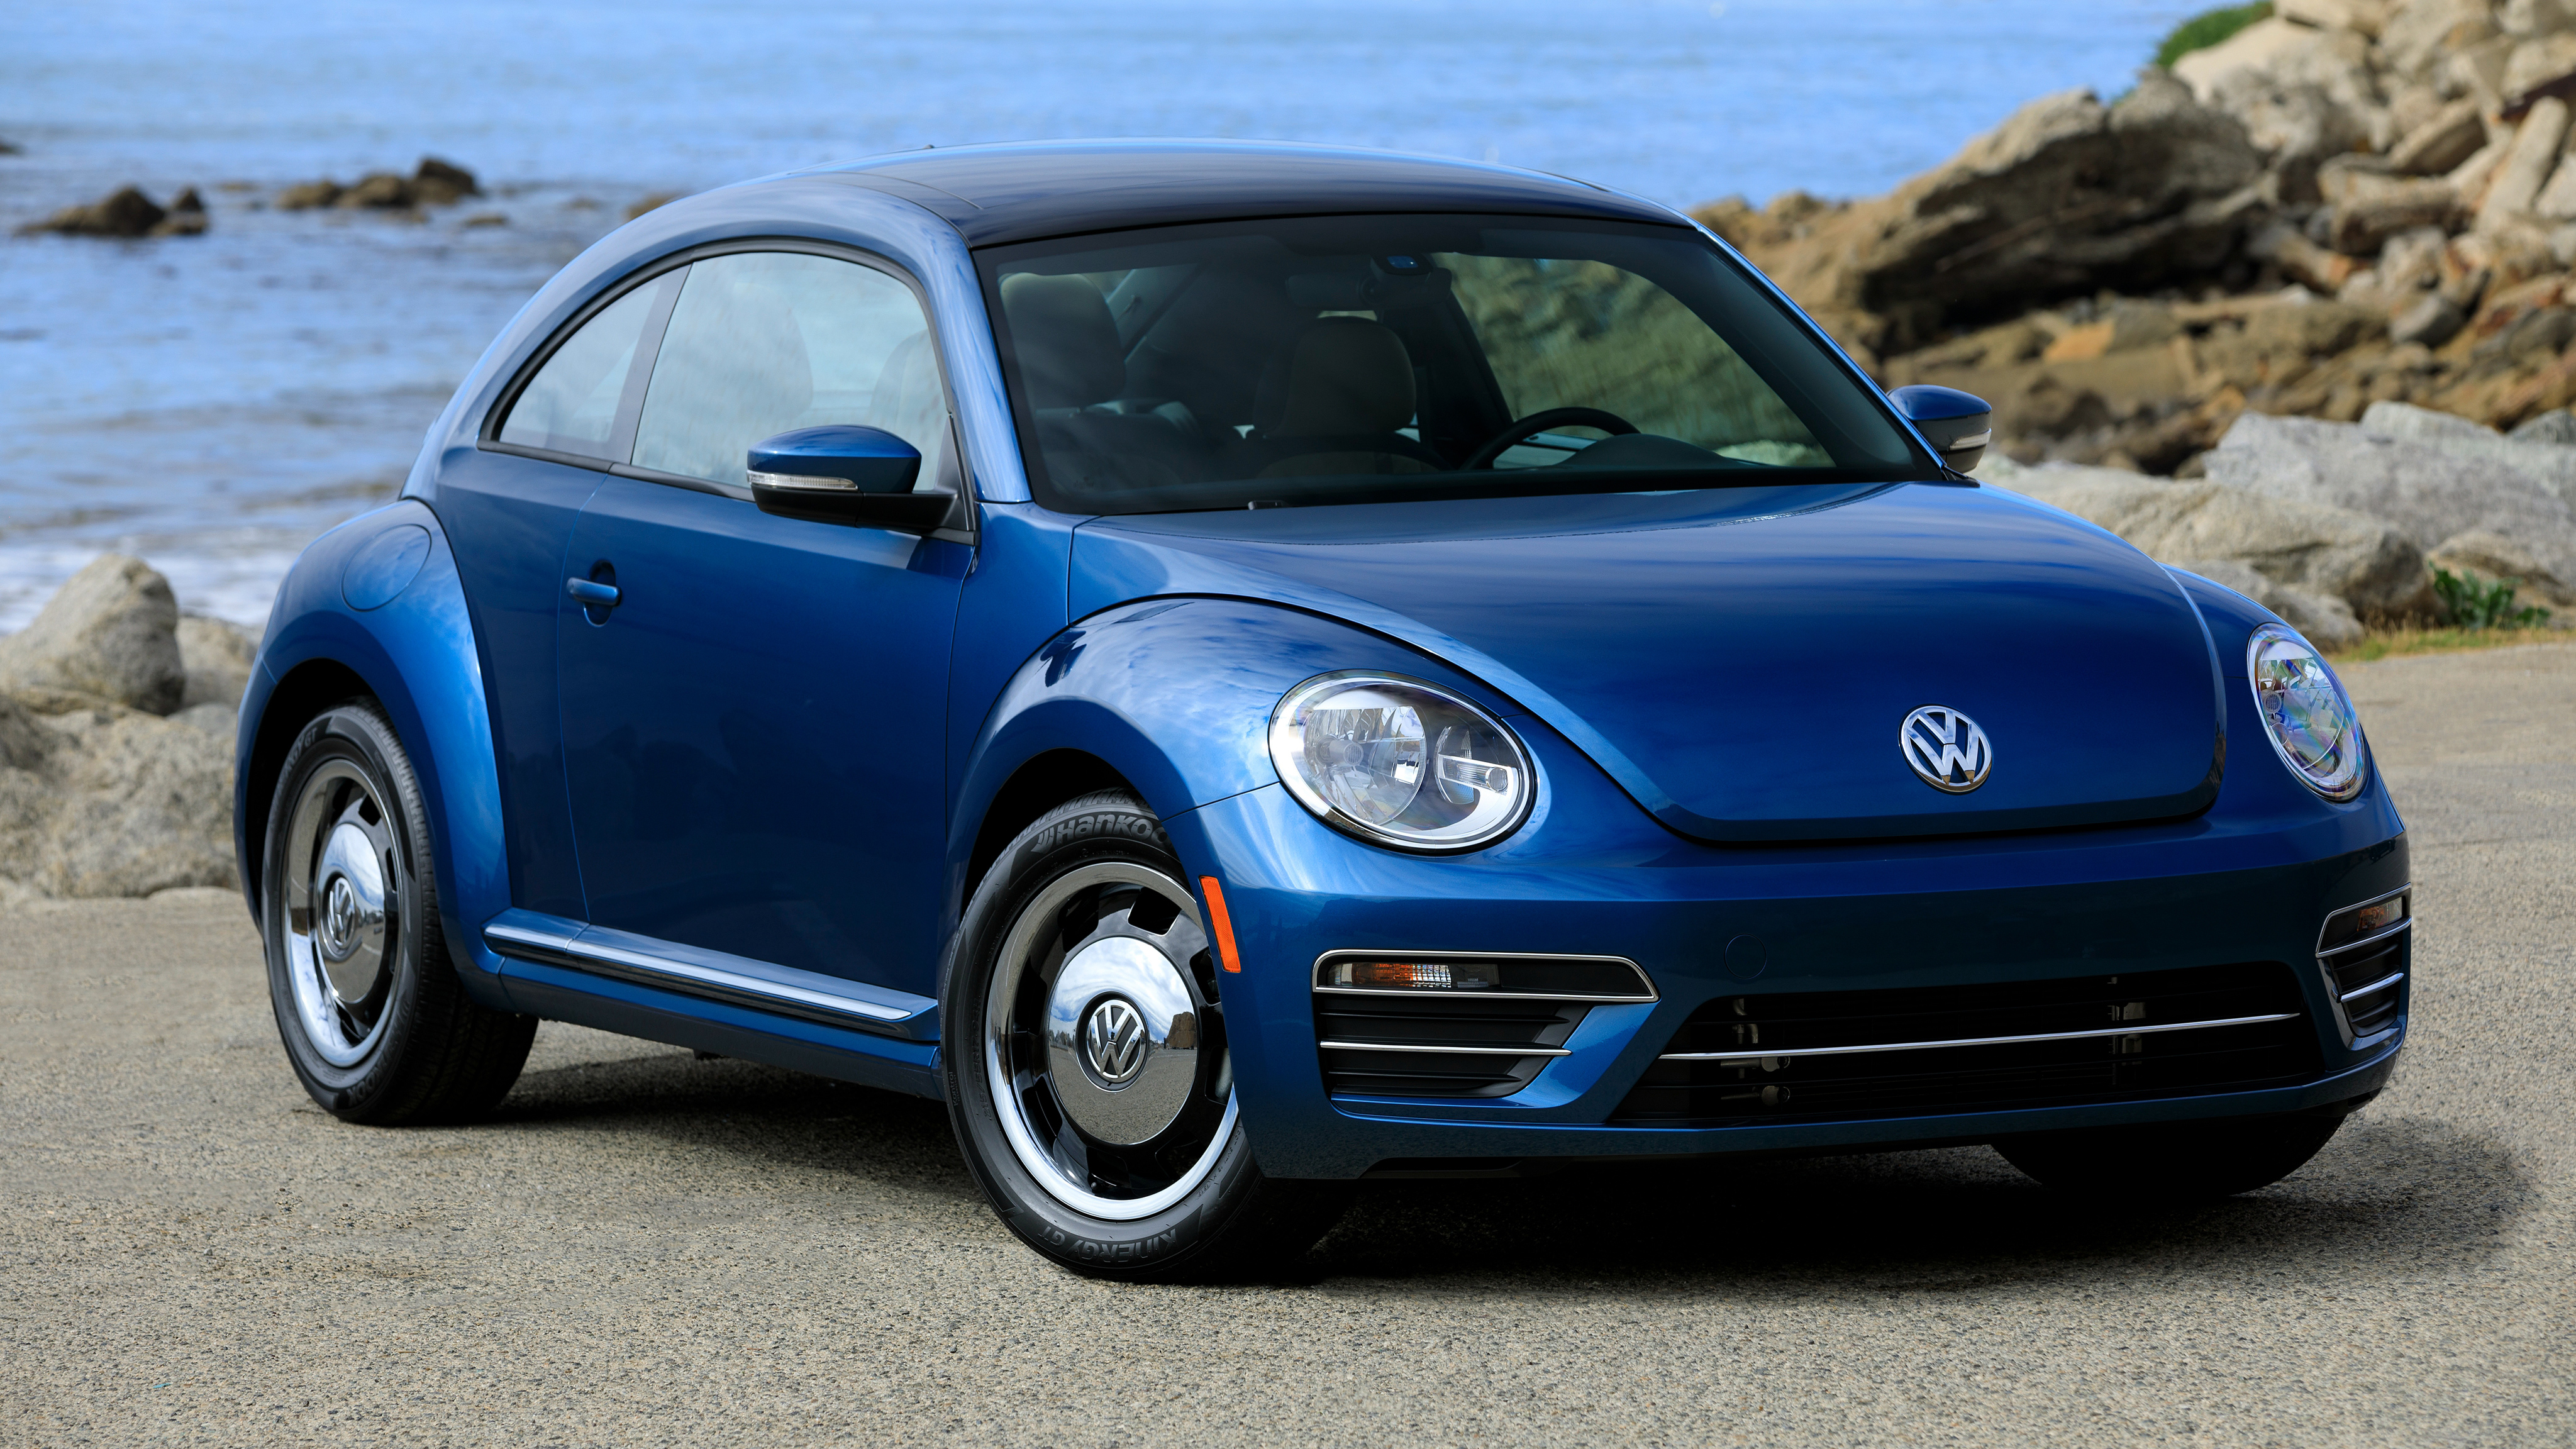 2018 Volkswagen Beetle Turbo 4K Wallpaper | HD Car Wallpapers | ID #9091